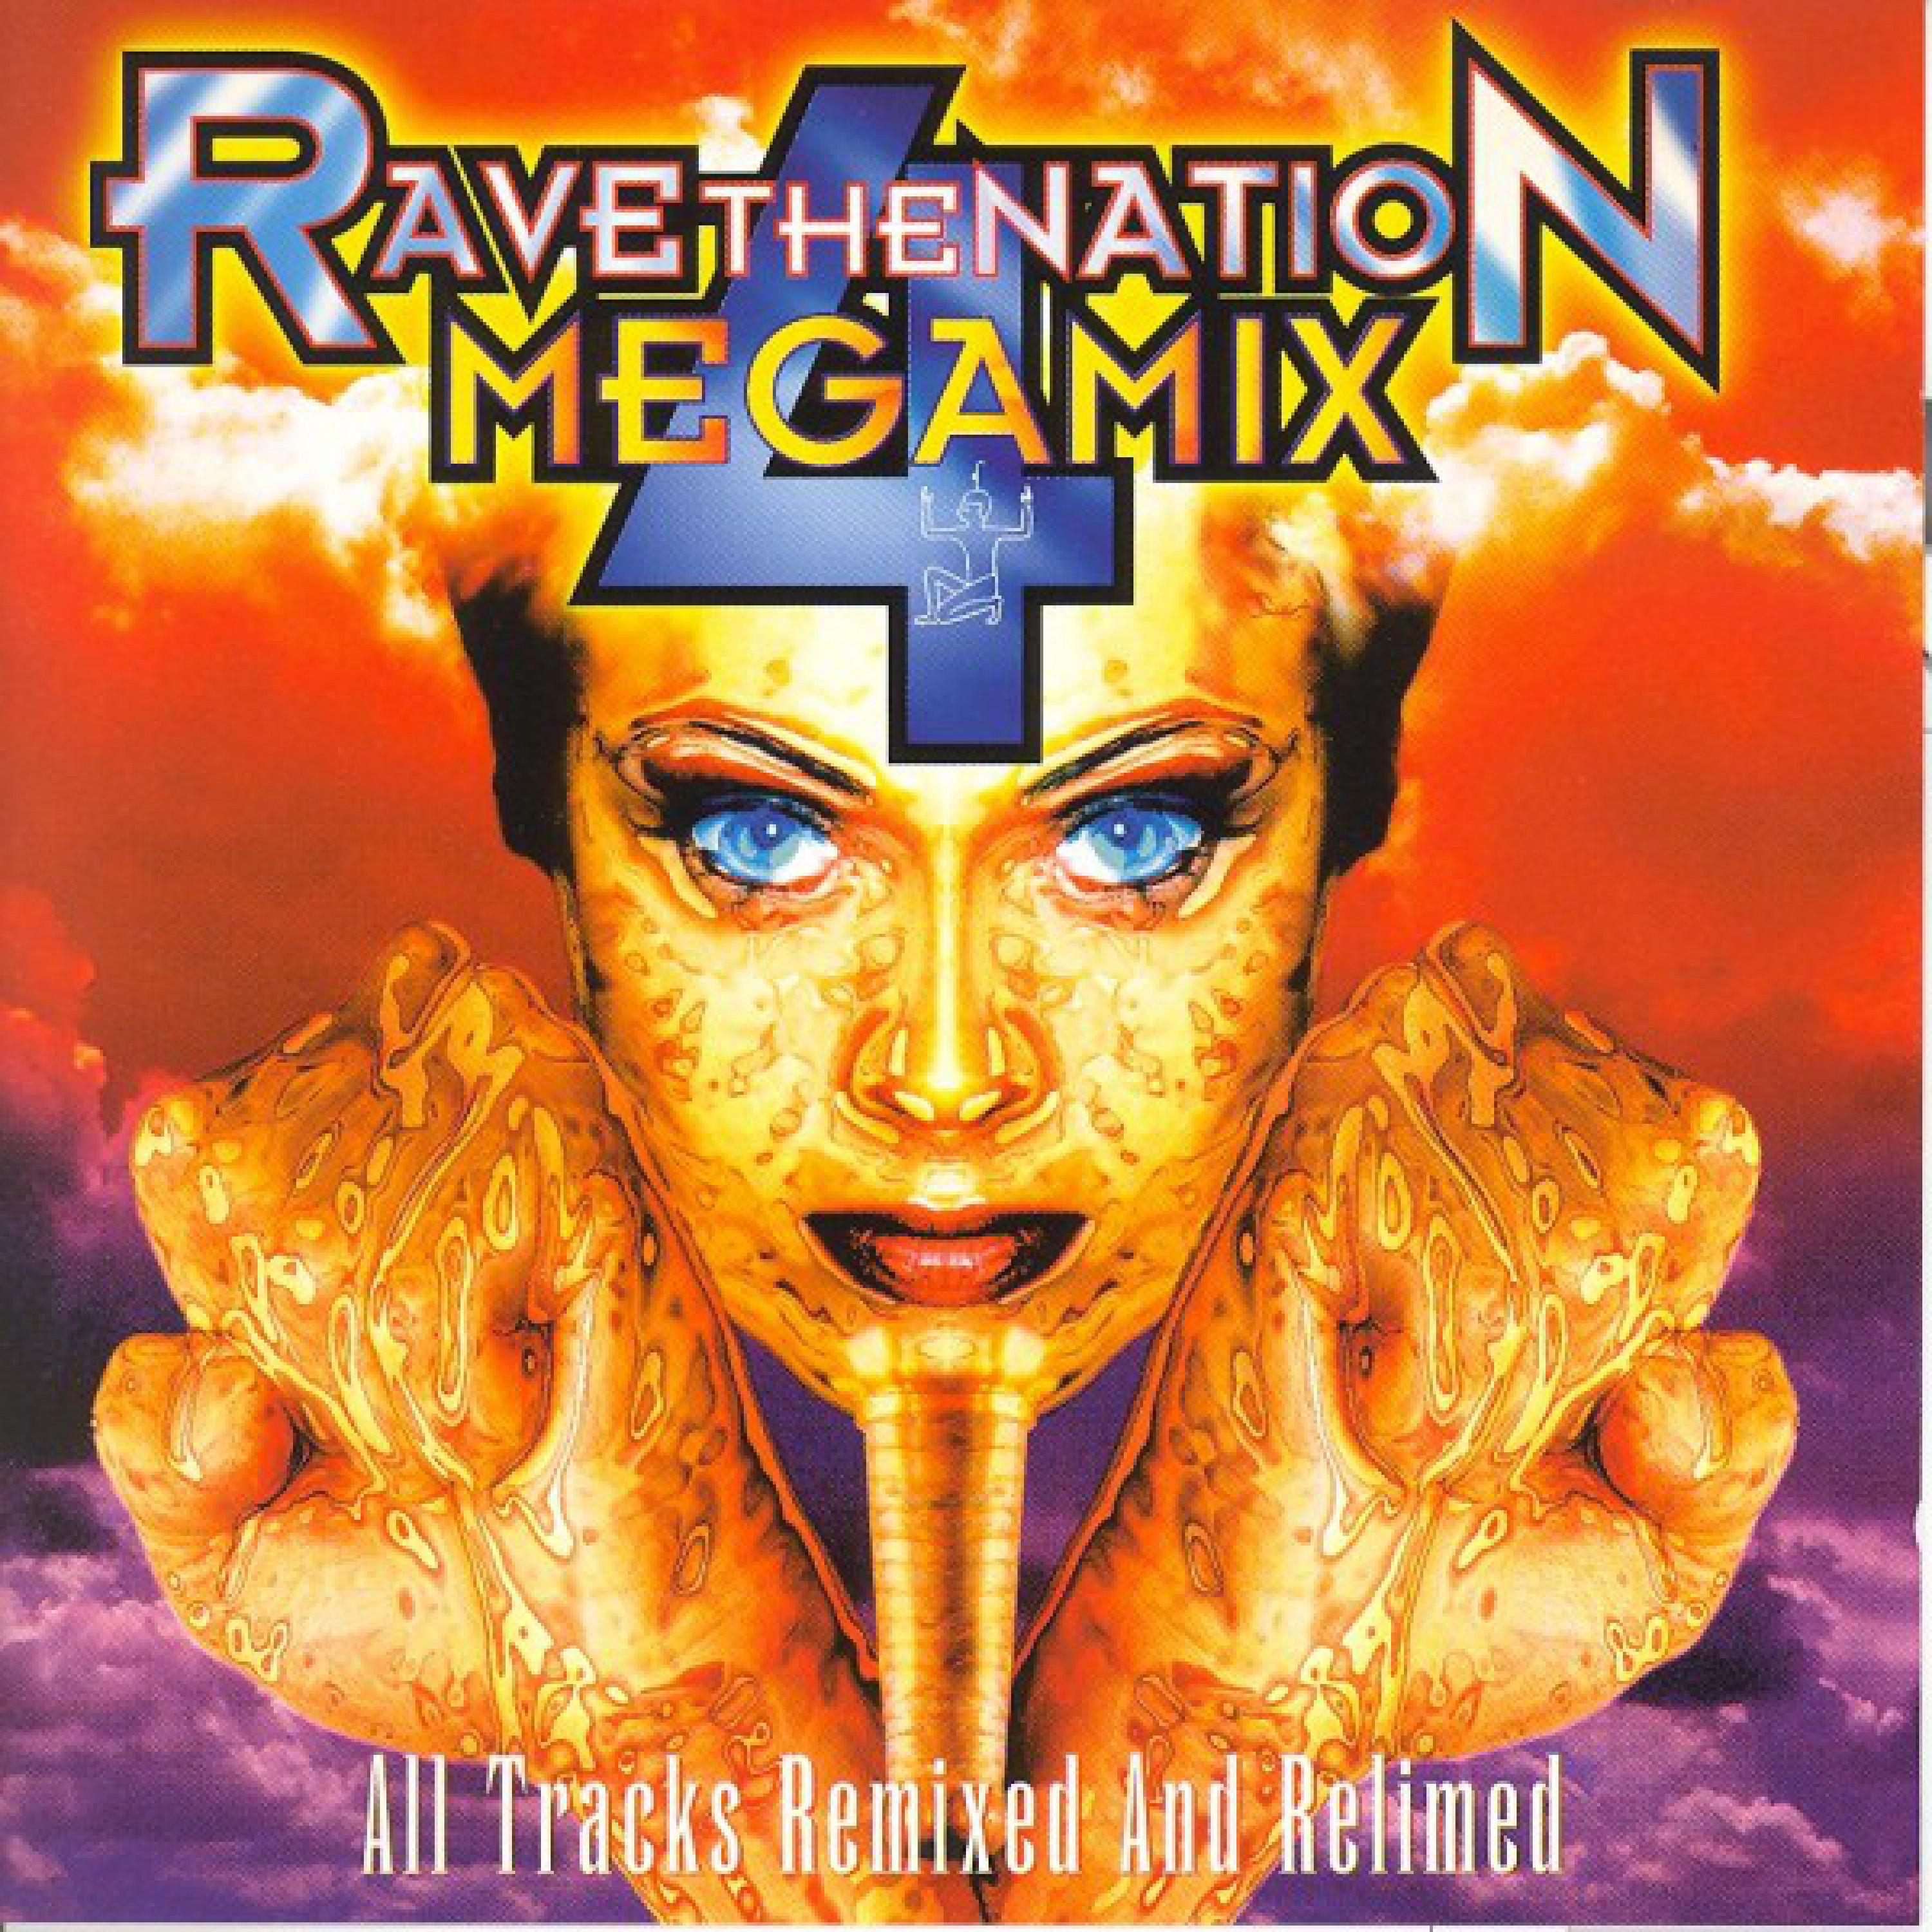 Ravers Need Friends (Rave The Nation Megamix, vol. 4)